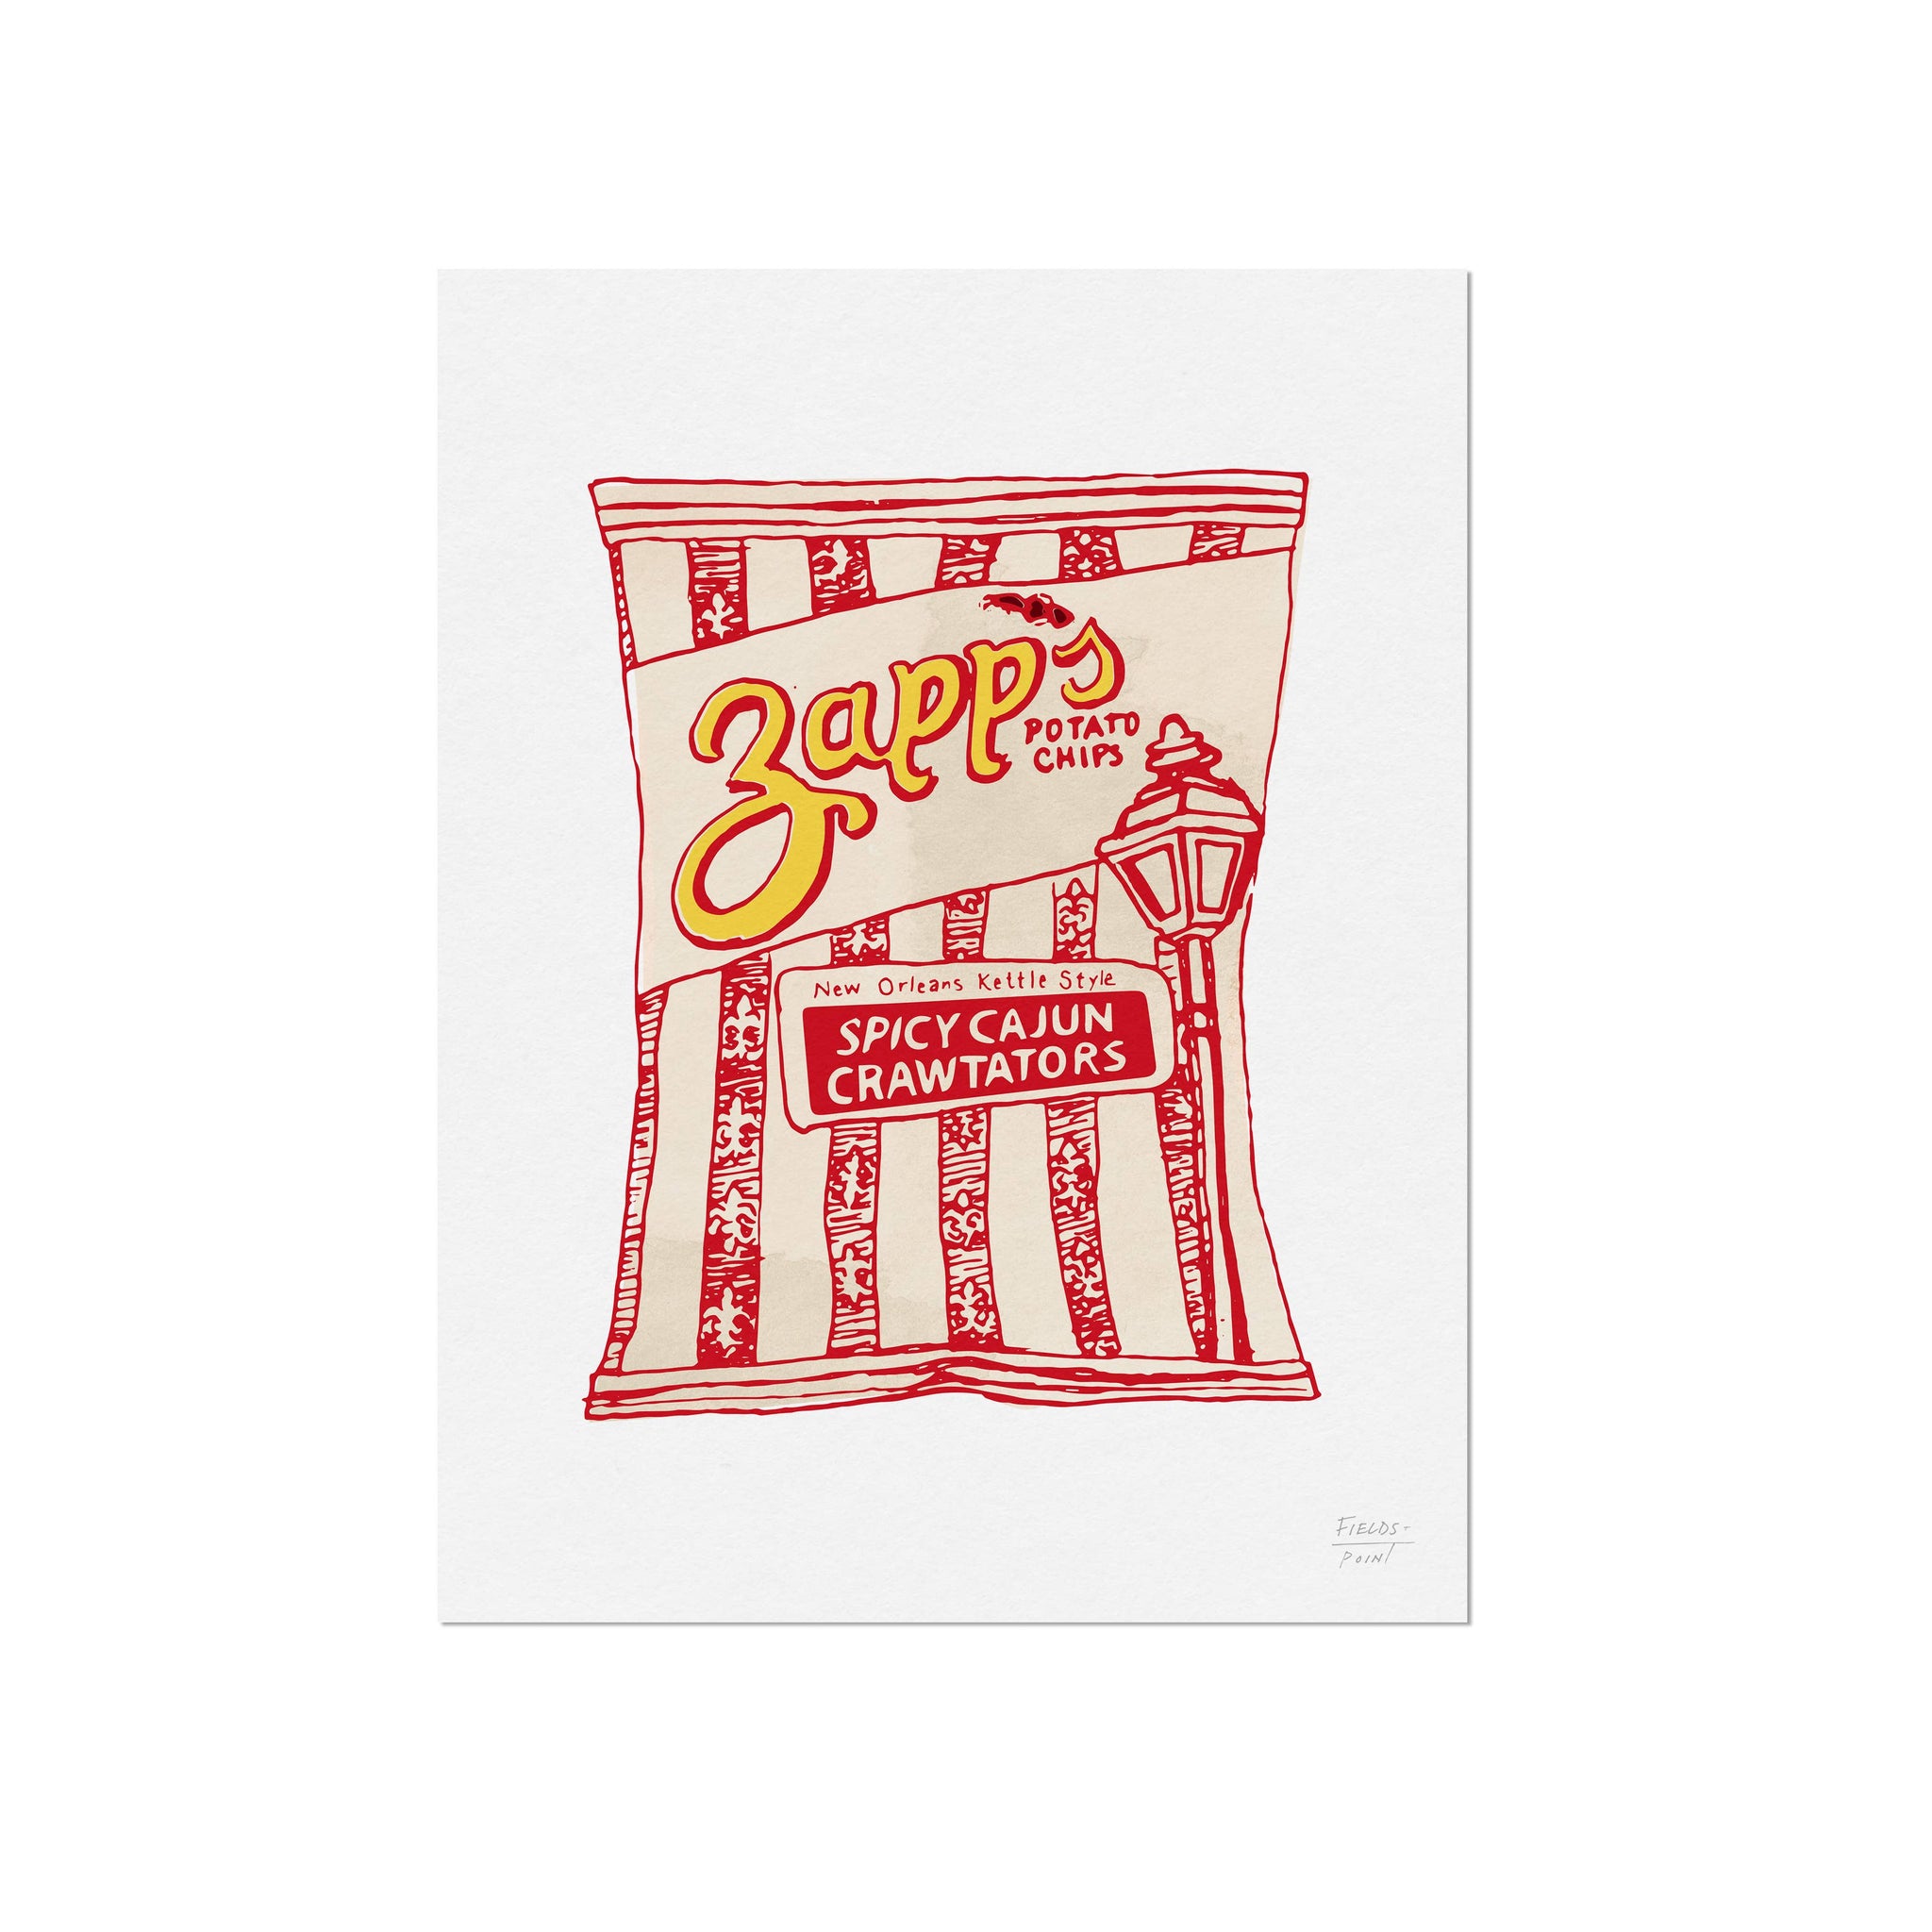 Zapp's Spicy Cajun Crawtator Chips Art Print